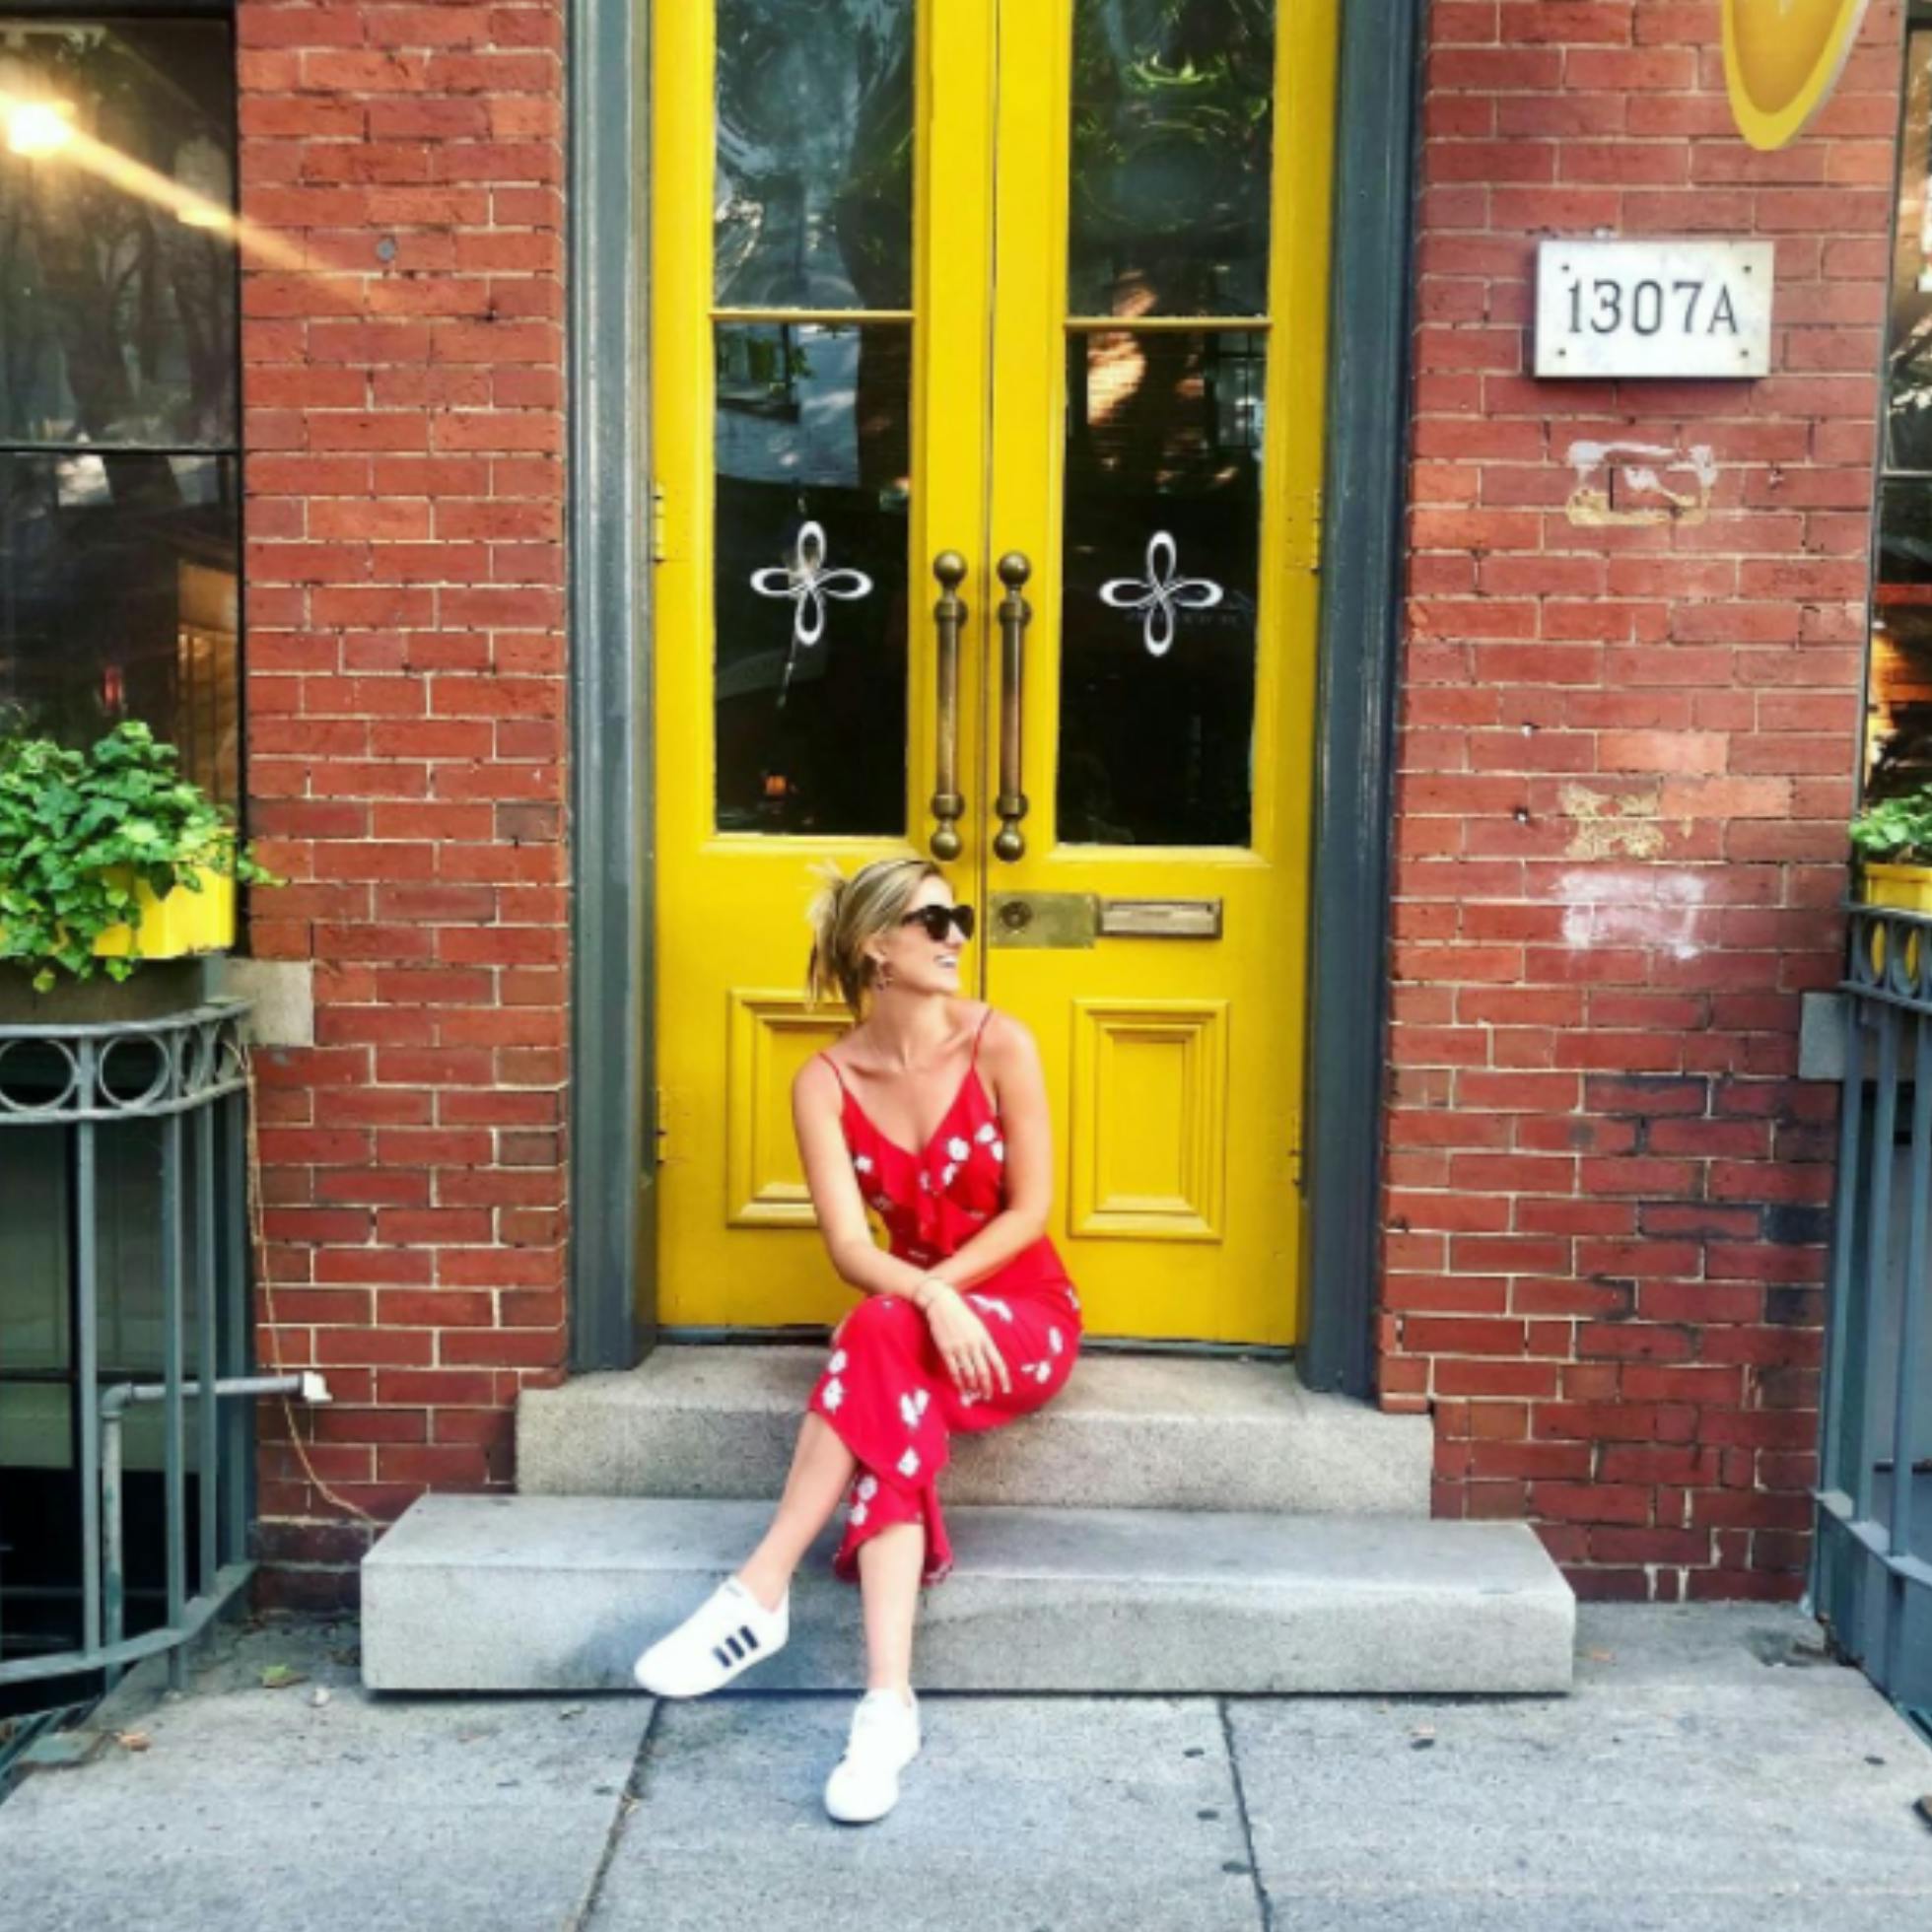 15 Instagram-Worthy Spots to Visit in Downtown Richmond